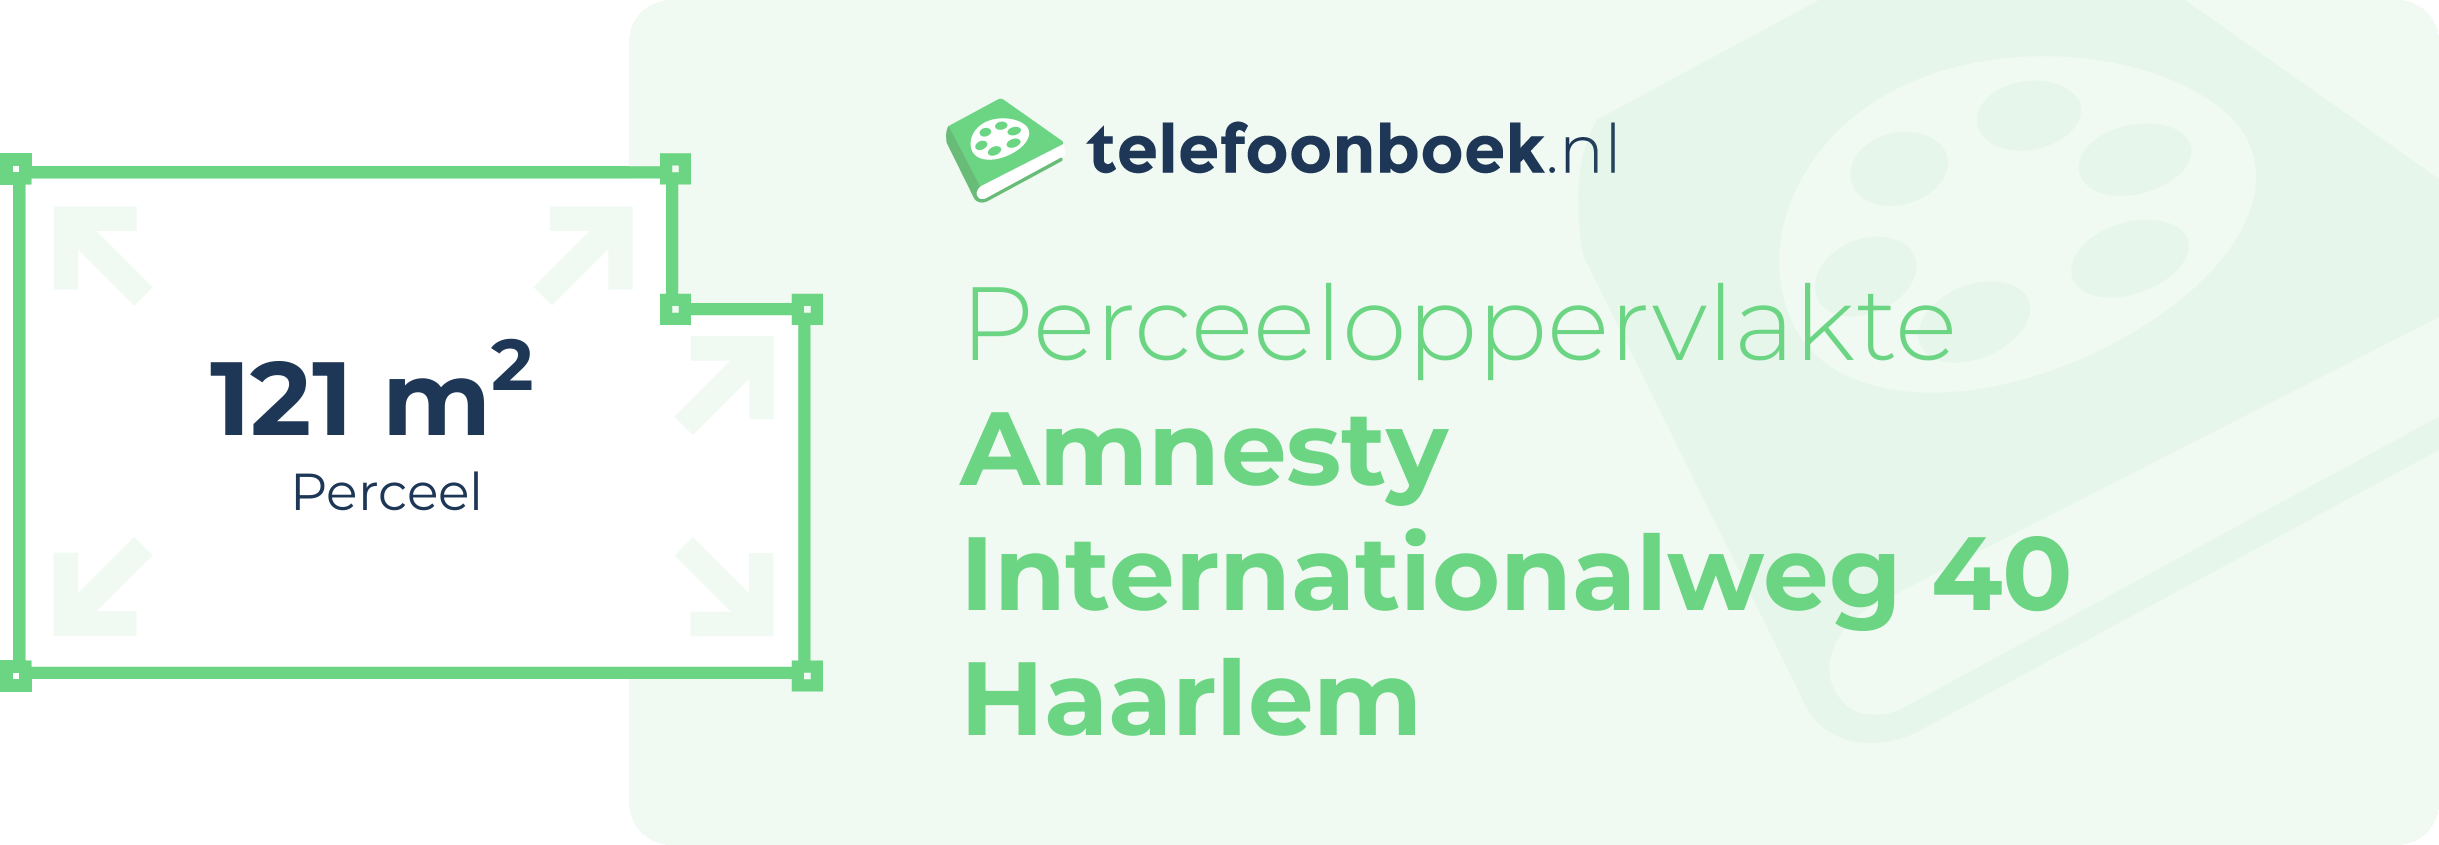 Perceeloppervlakte Amnesty Internationalweg 40 Haarlem